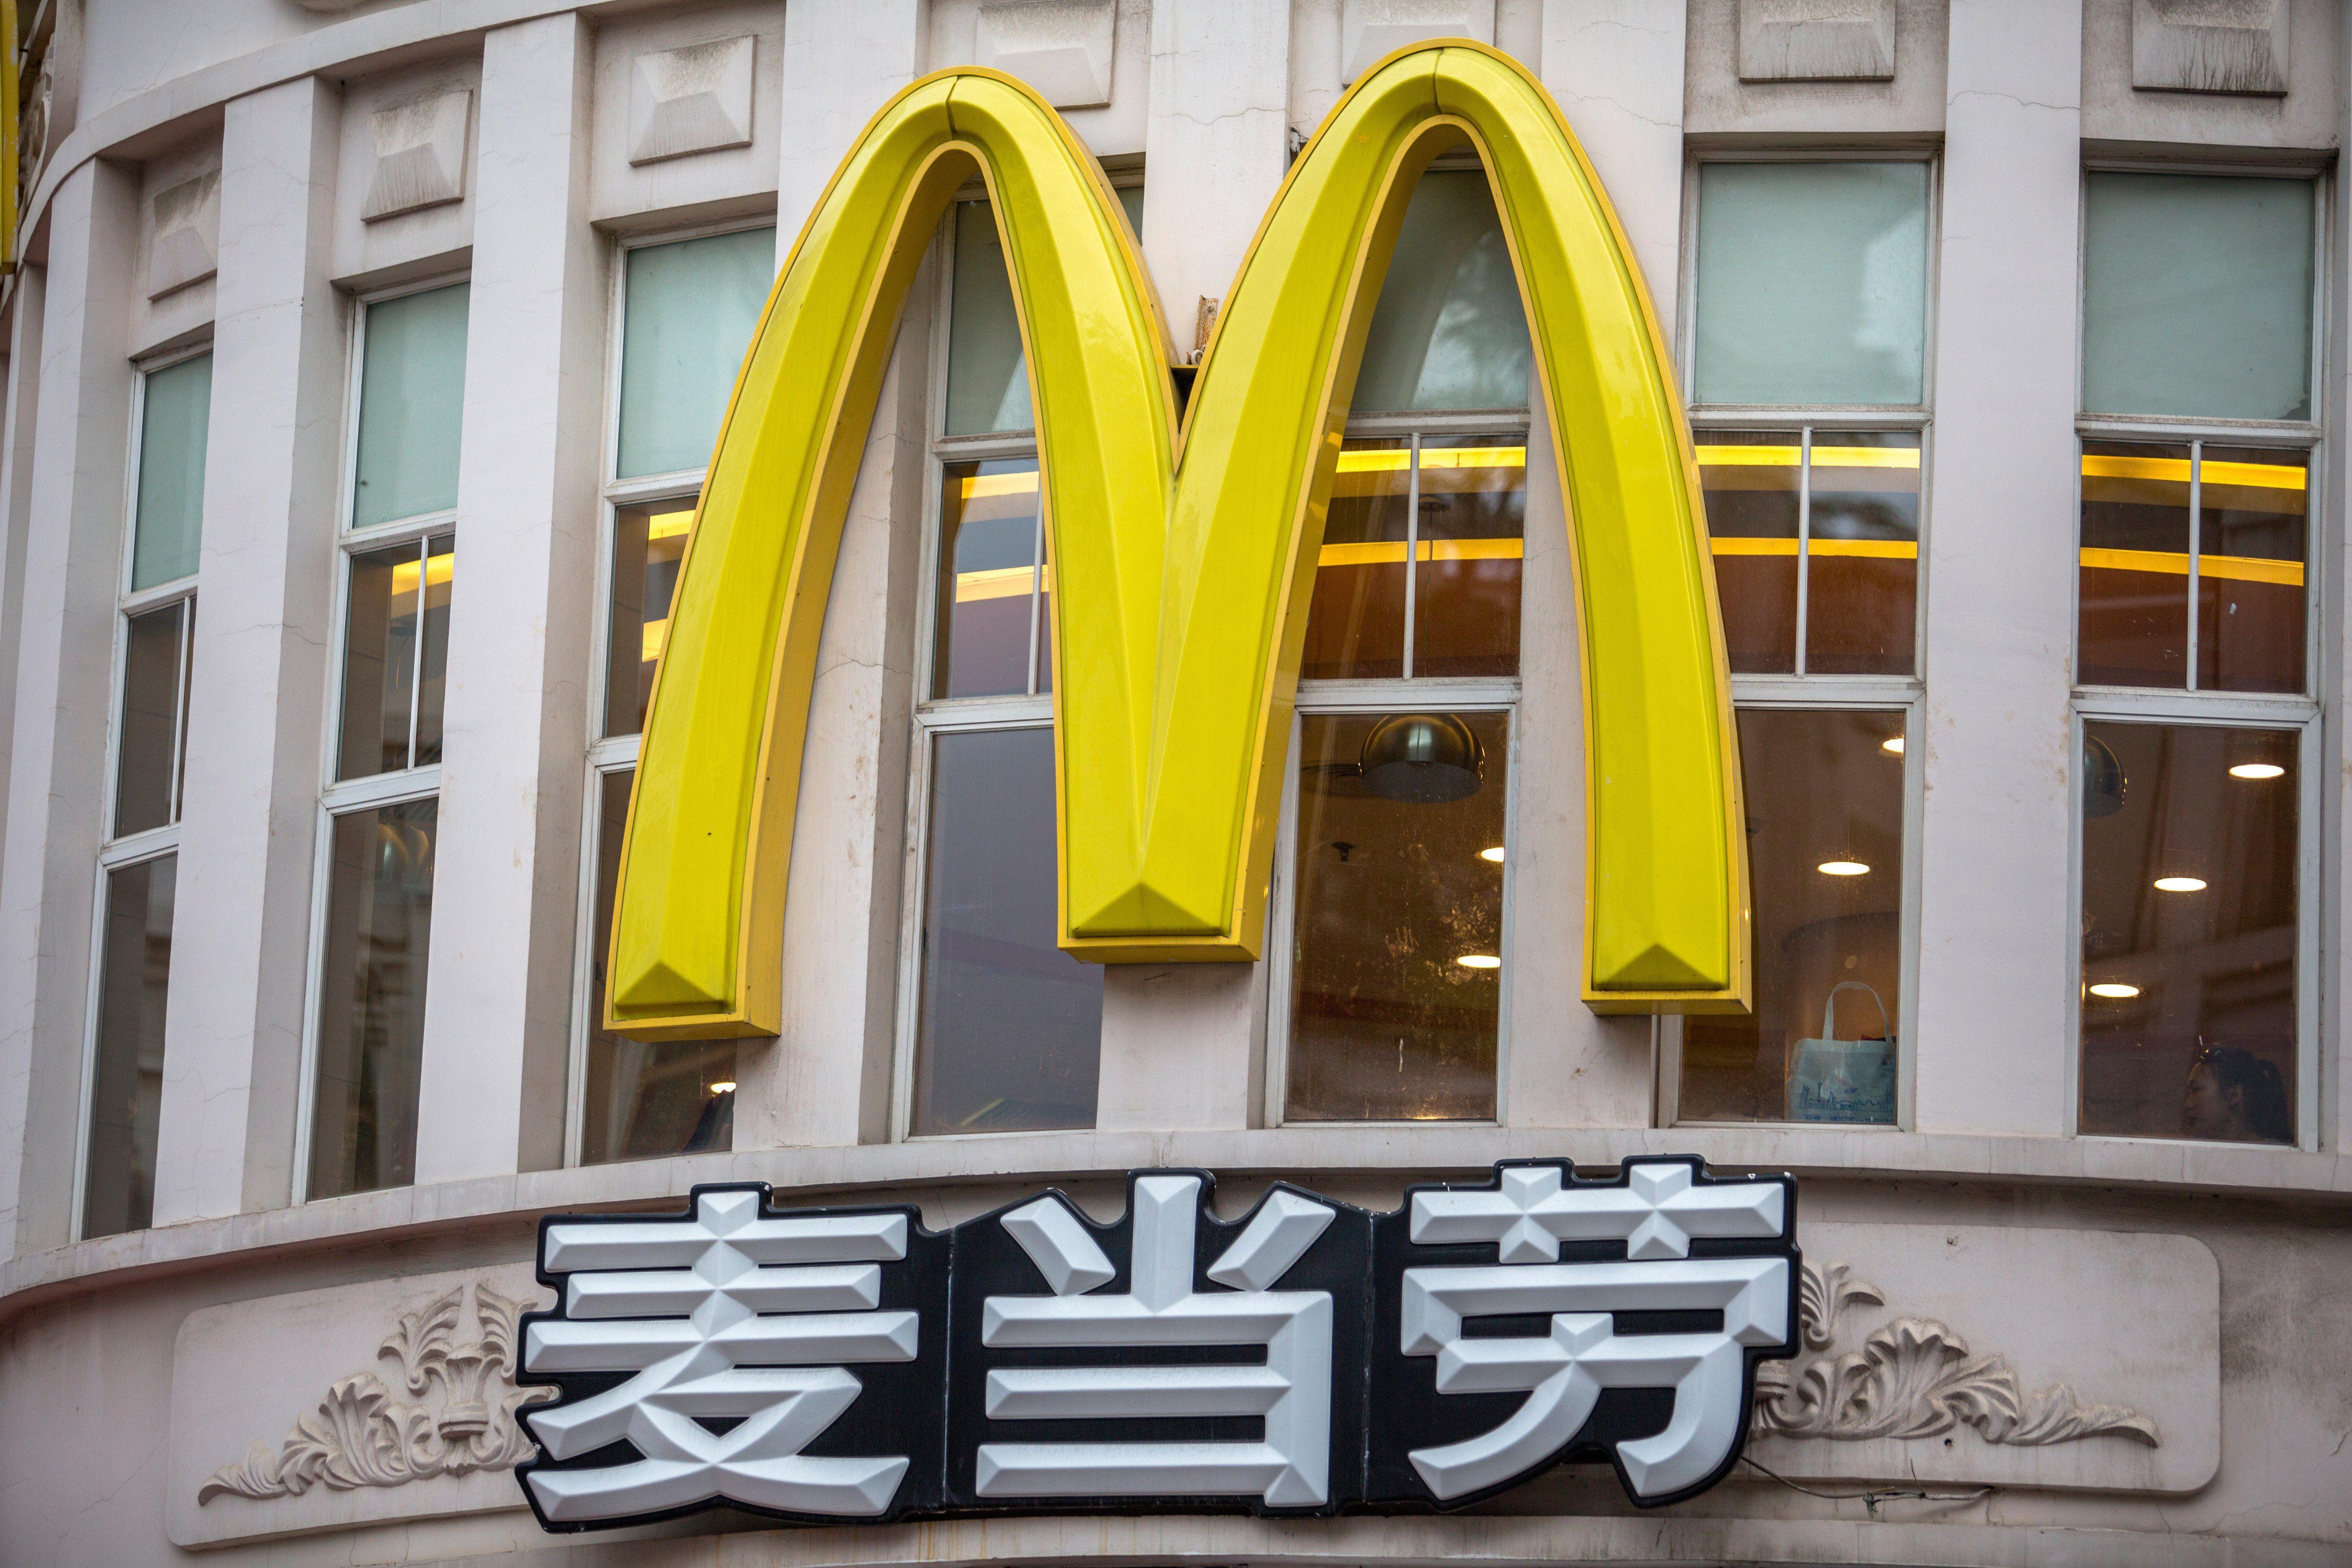 Chinese McDonald's Logo - McDonald's Has a New Gray Hamburger